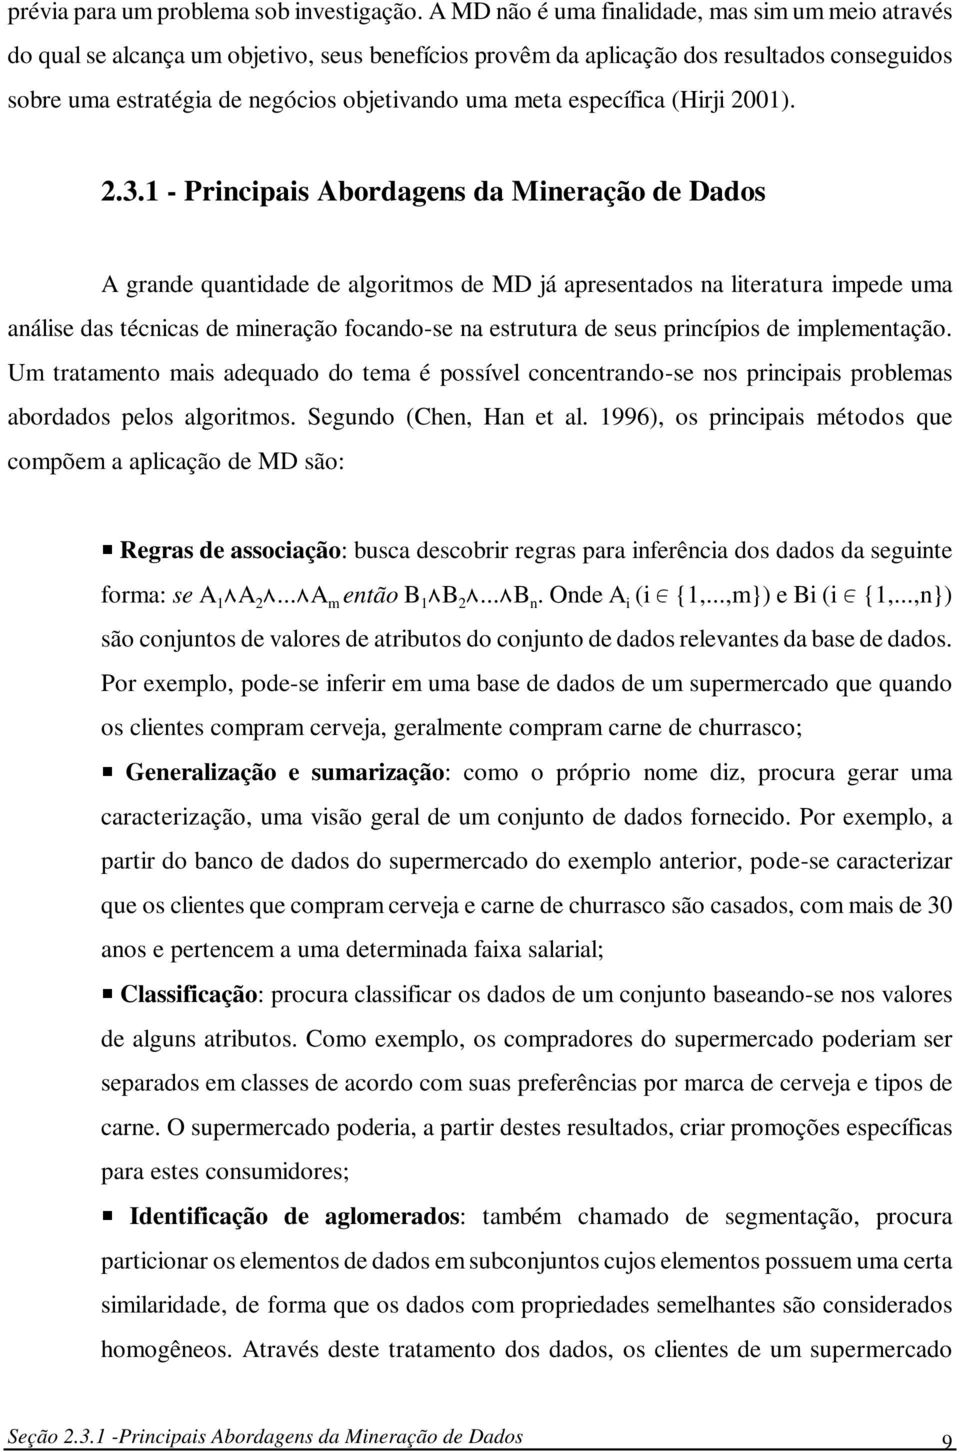 específica (Hirji 2001). 2.3.